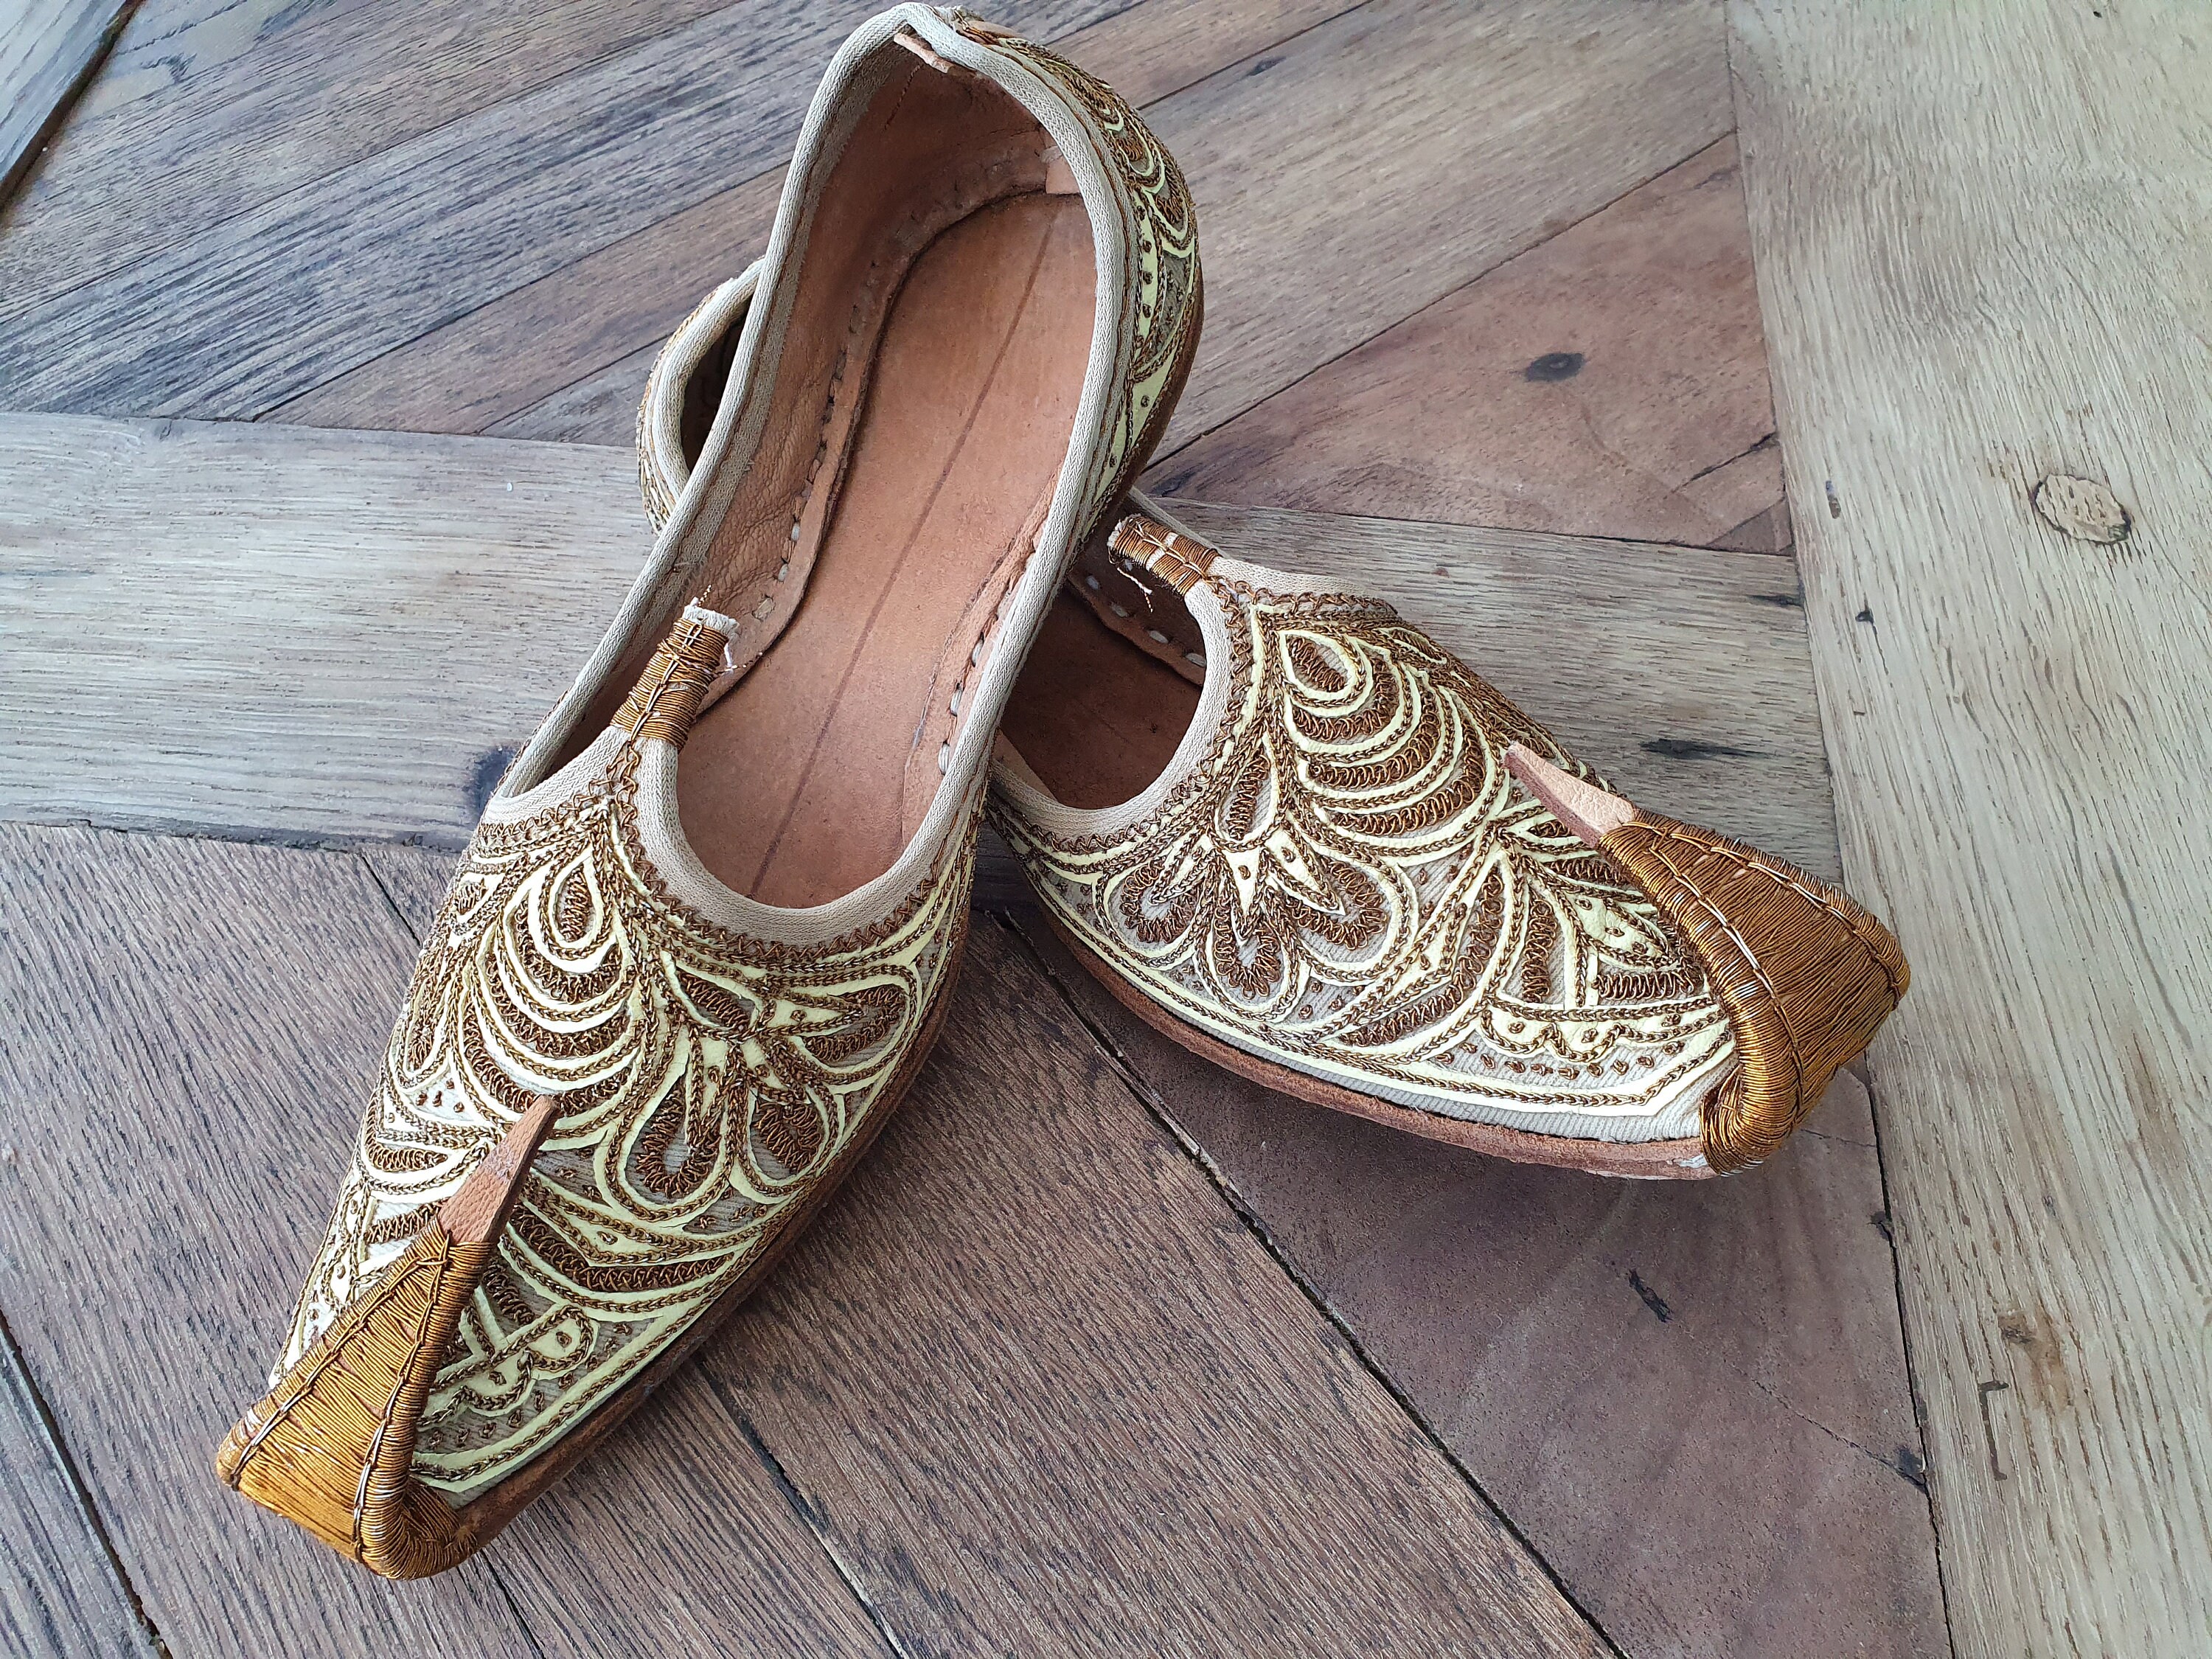 RUIMTE: Punjabi jutti US Maat 9 bruids Instapmodel Schoenen damesschoenen Instappers Juttis en mojaris Zilver Bruidsjutti Leren damesschoen Indiase schoenen Khussa Mojri Pakistaanse schoenen 